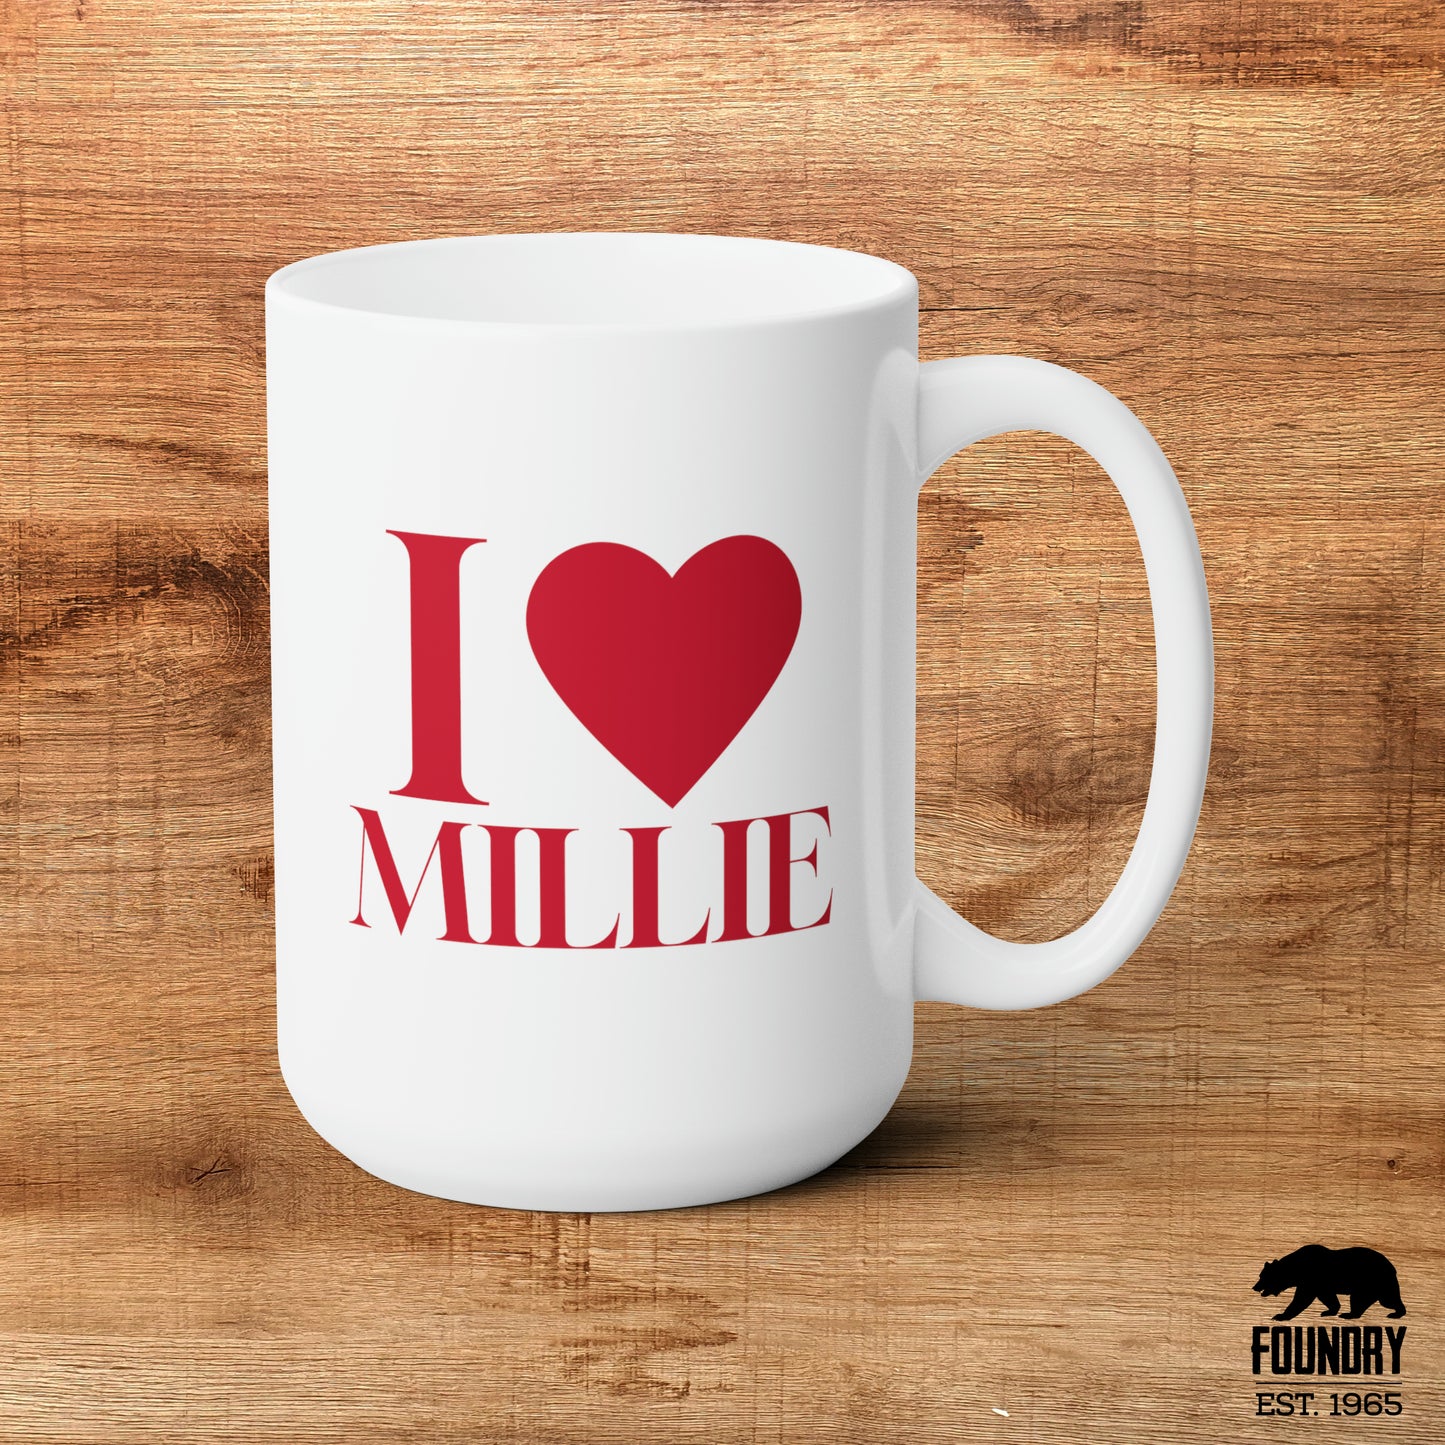 I Love Mille - Ceramic Mug 15oz